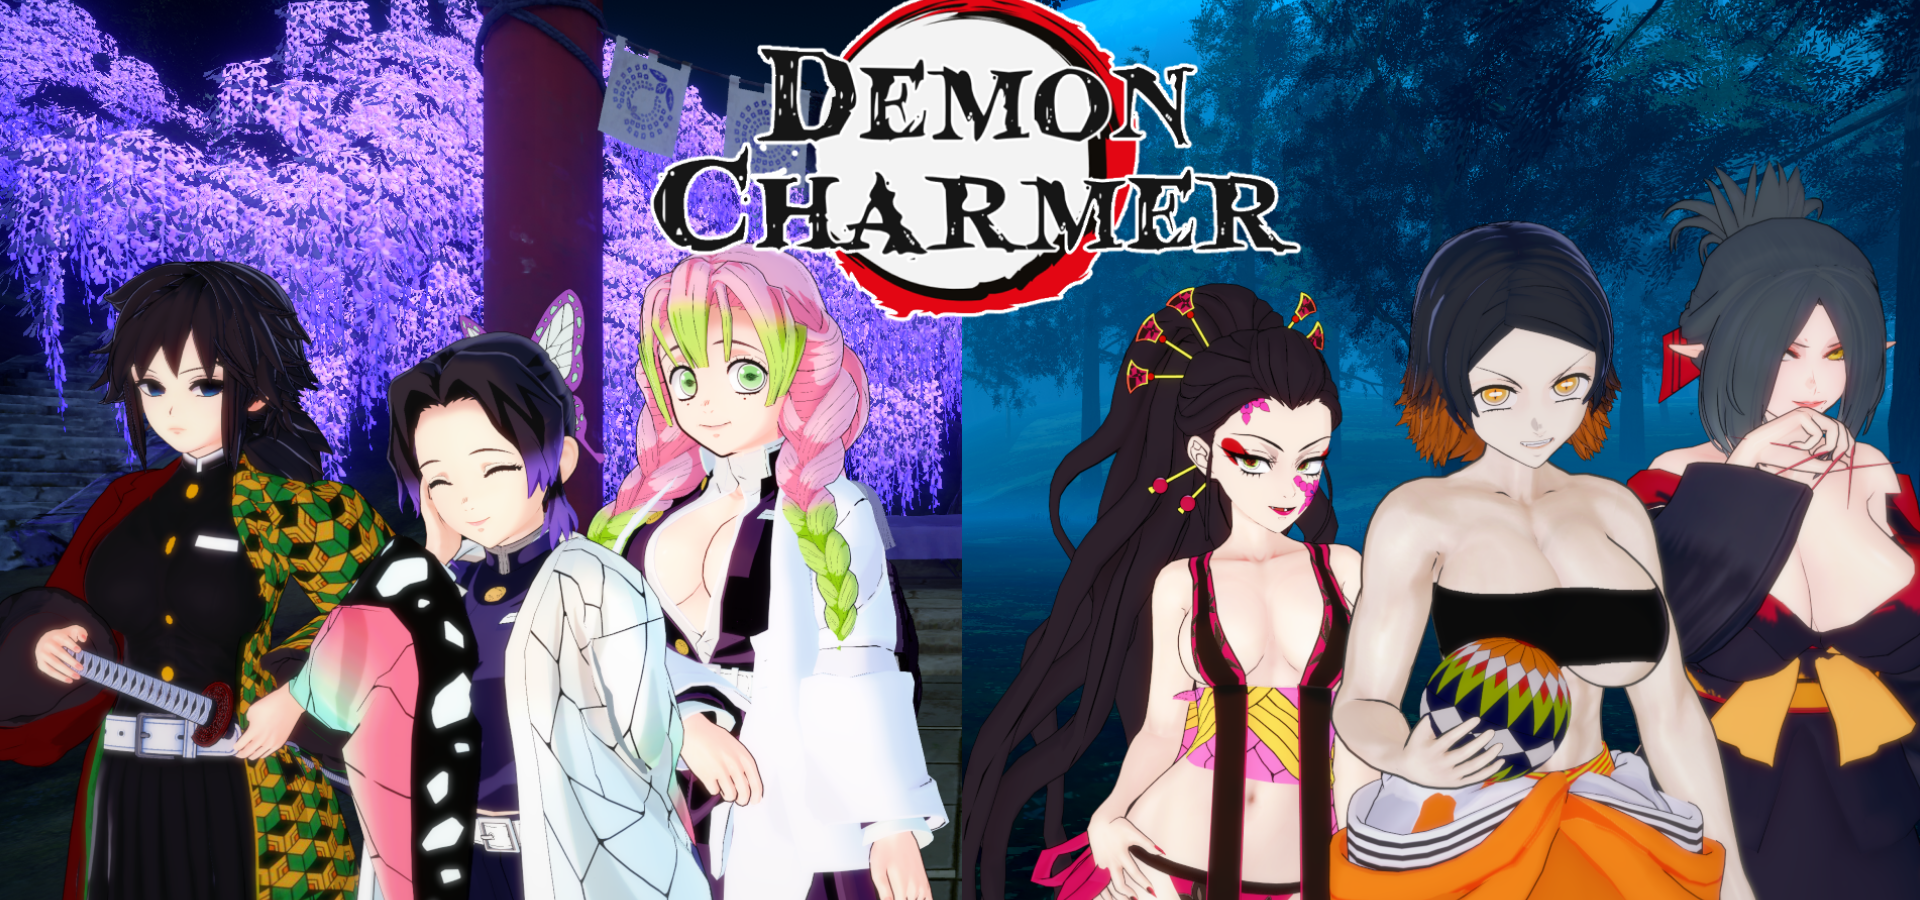 Demon Charmer1.png